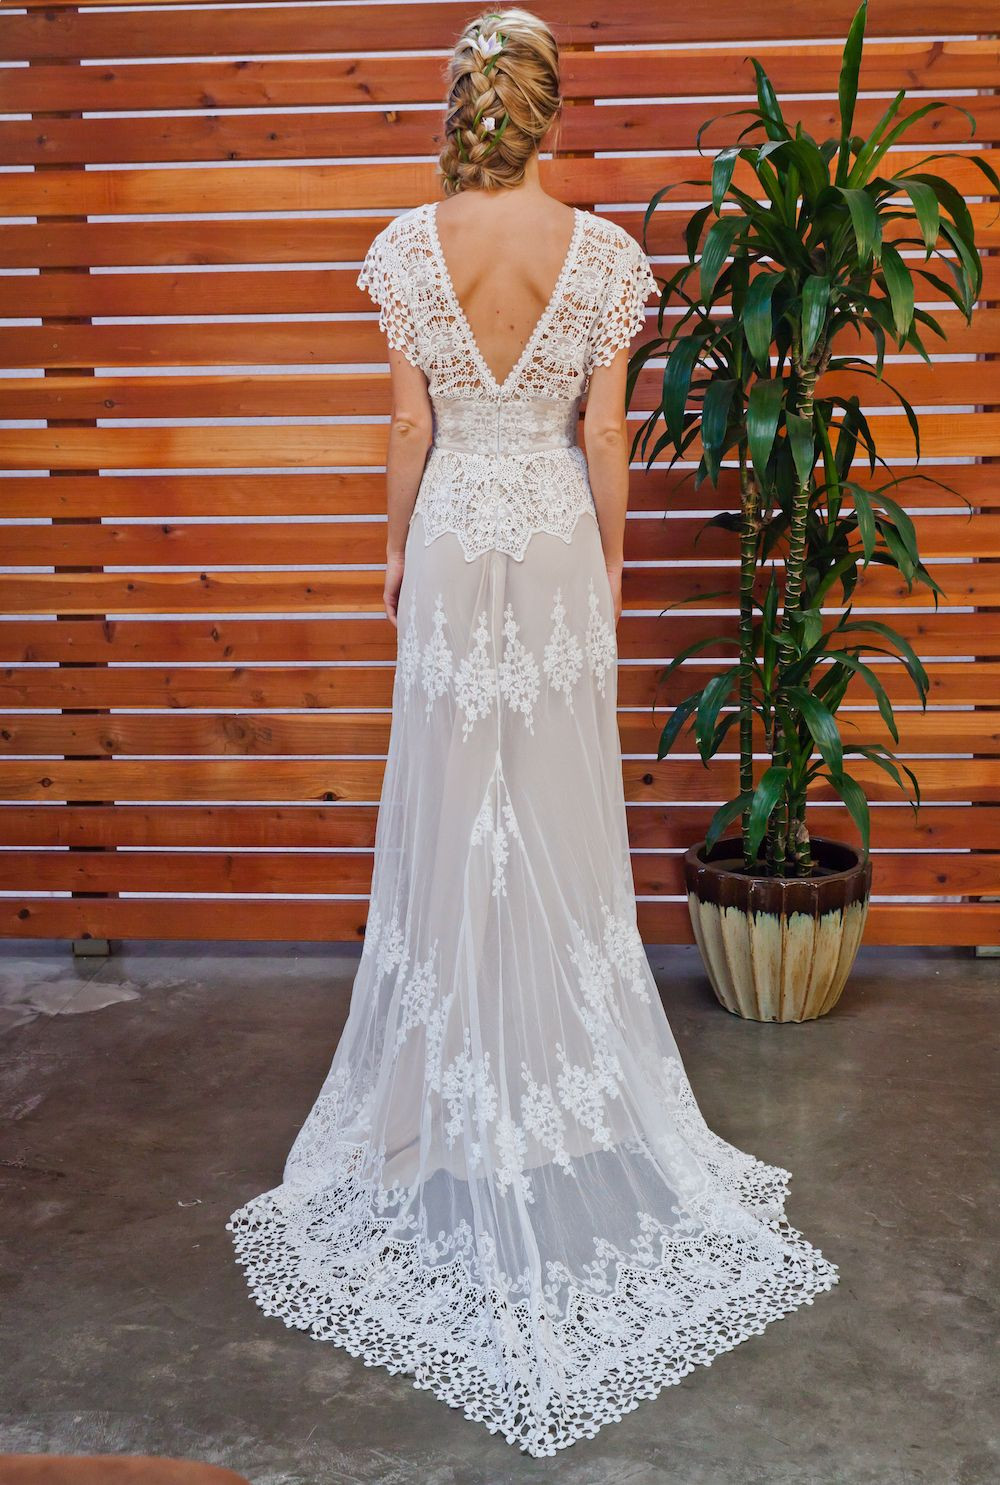 Lace Wedding Gowns Pinterest
 dreamy cotton lace bohemian wedding gown